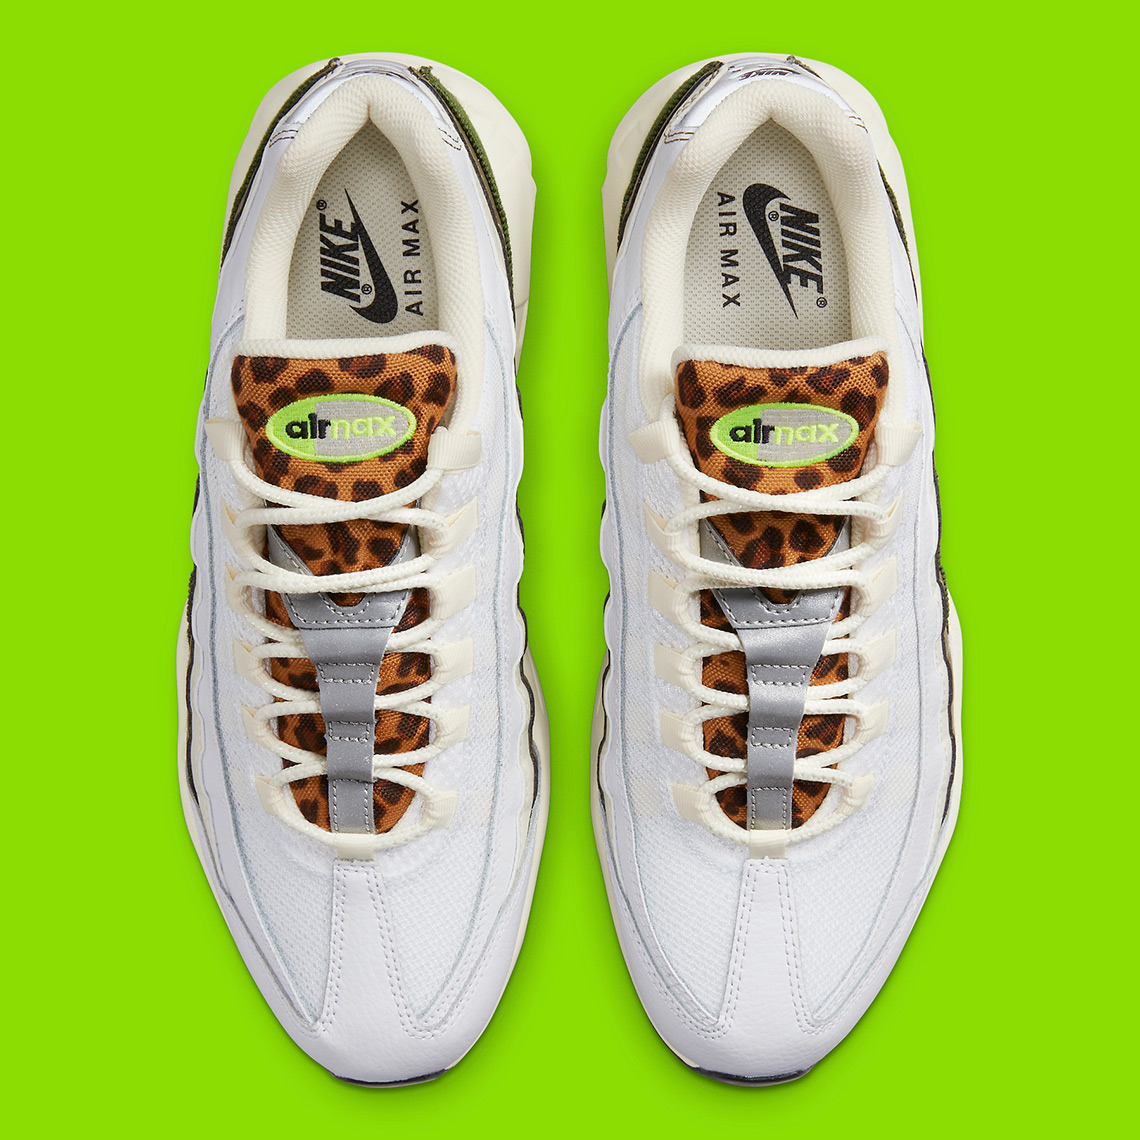 atómico sol Campaña Nike Air Max 95 "Leopard Tongue" DX8972-100 | SneakerNews.com